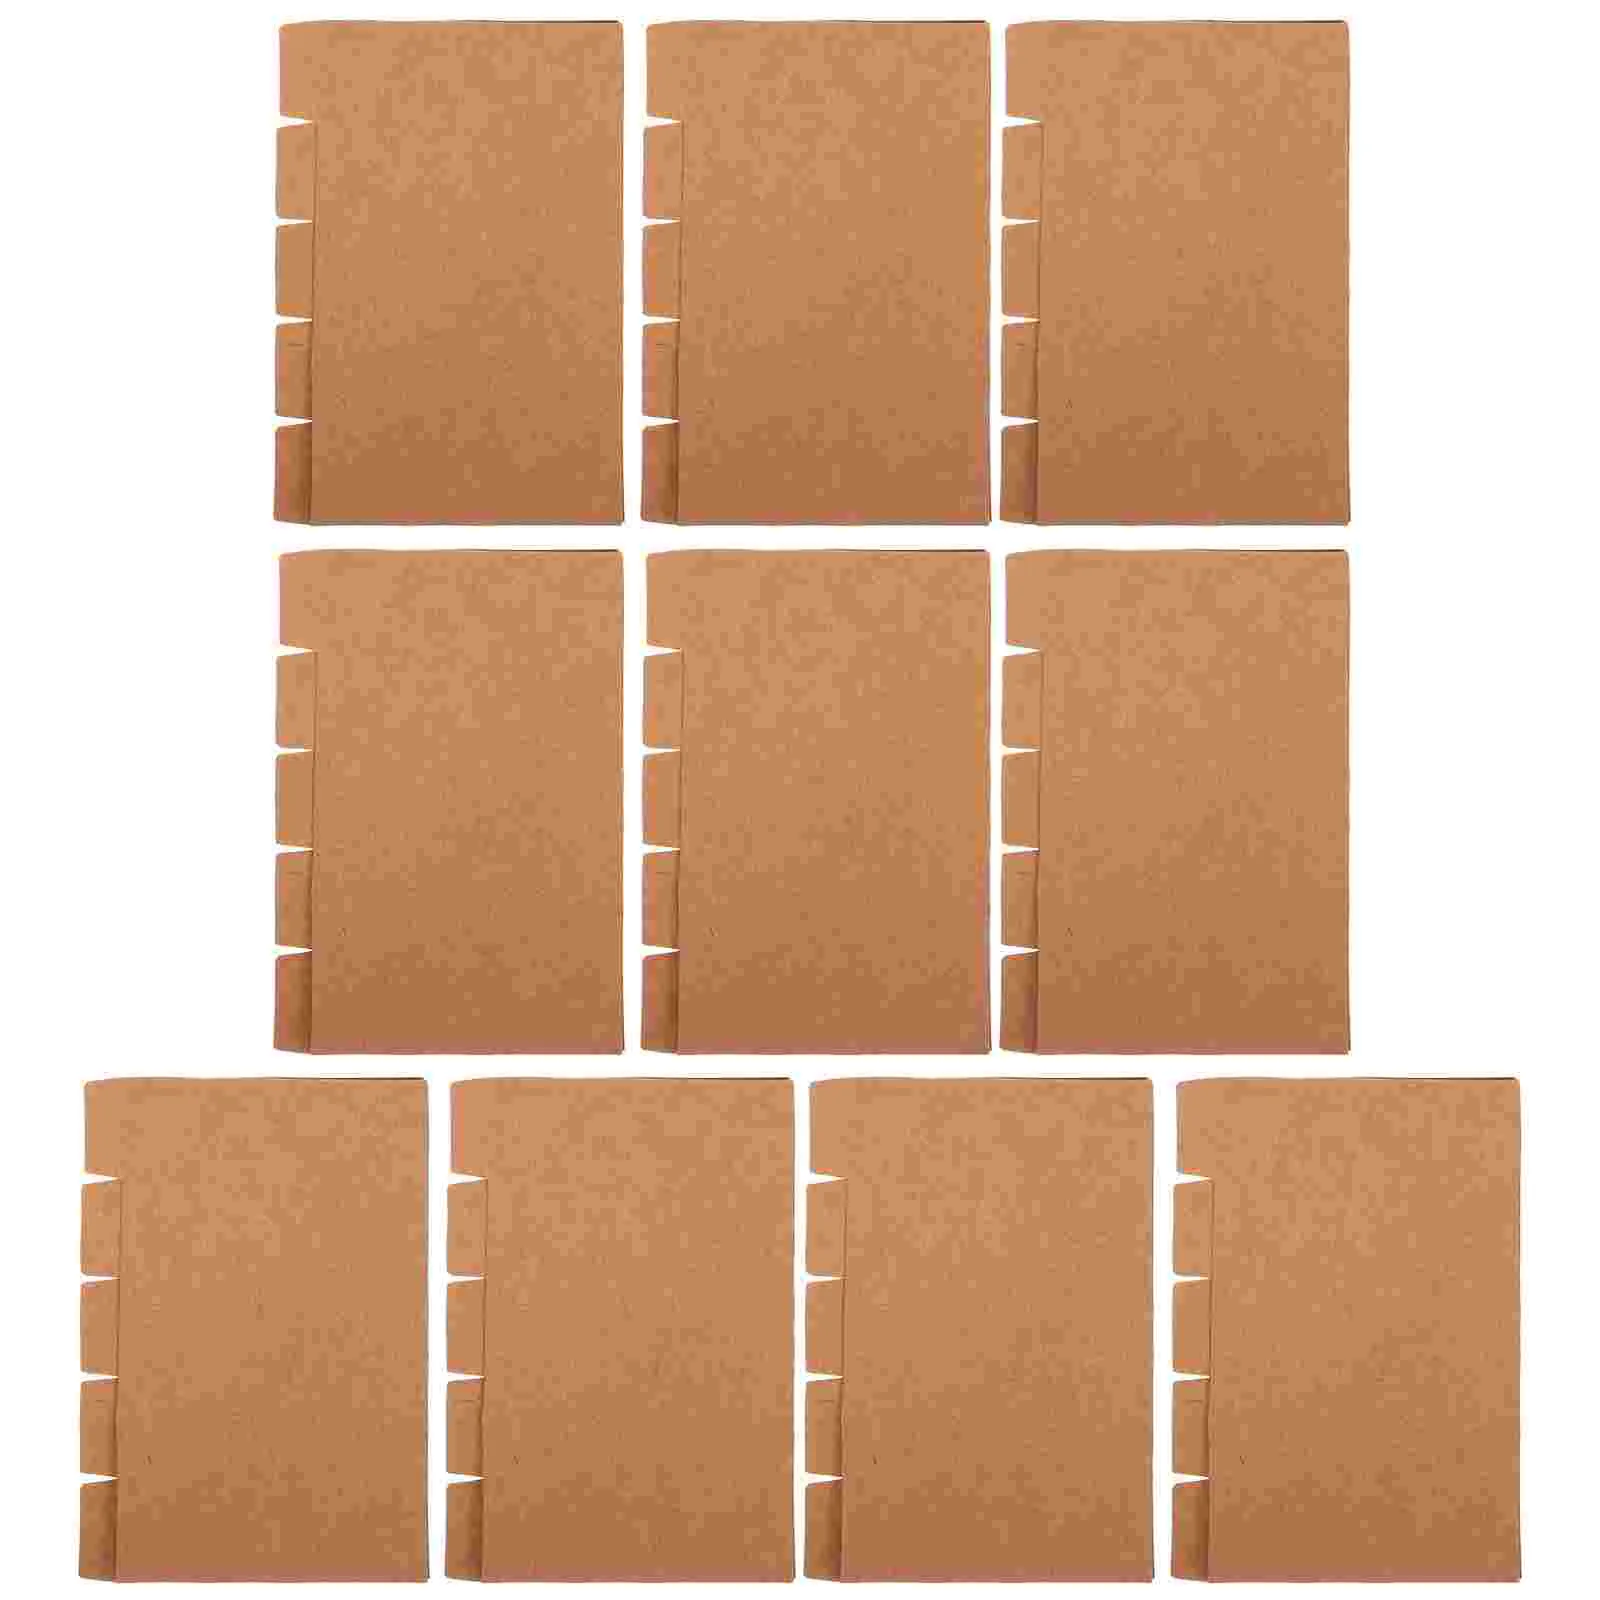  Разделители из крафт-бумаги 3 x 5 дюймов Разделитель индекса Разделитель из коричневой бумаги Разделители Карточки для заметок с вкладками 0